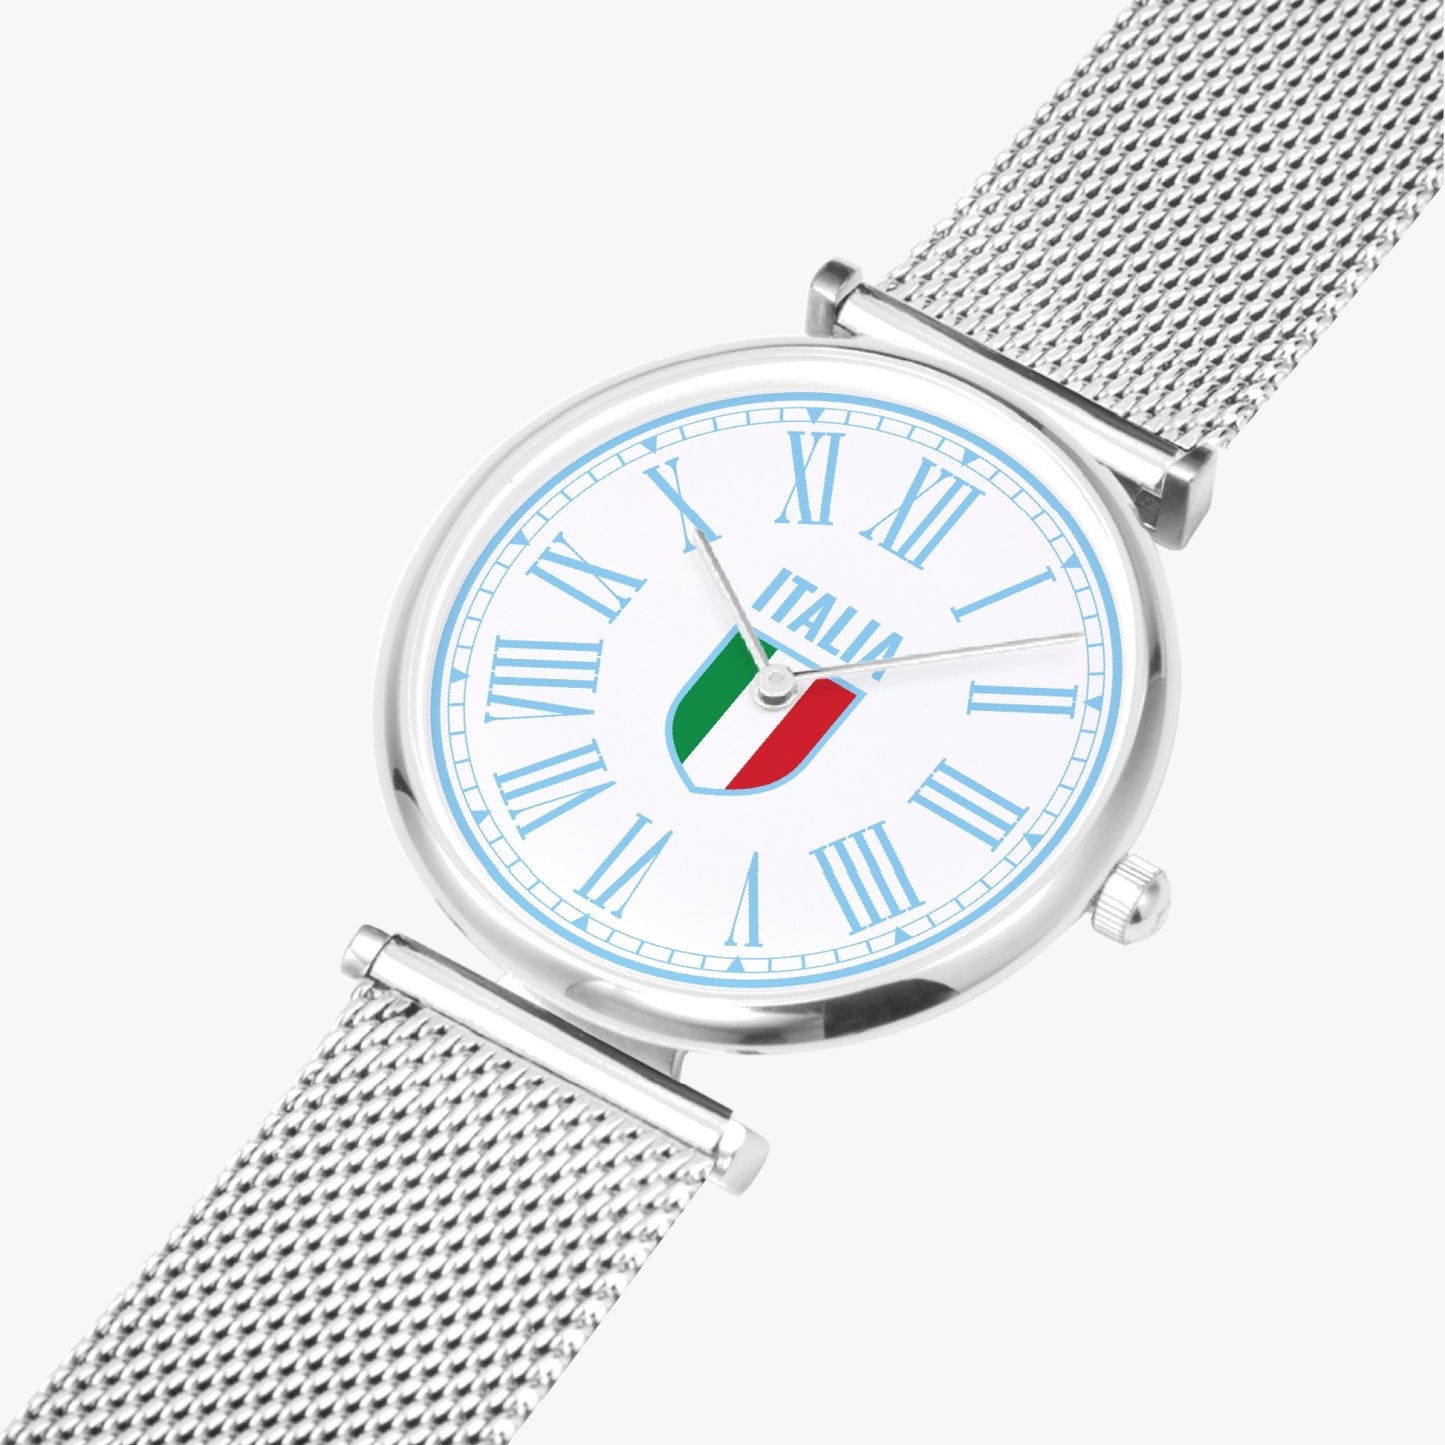 Ultra-Thin Quartz Stainless Steel Watch - Italy light blue